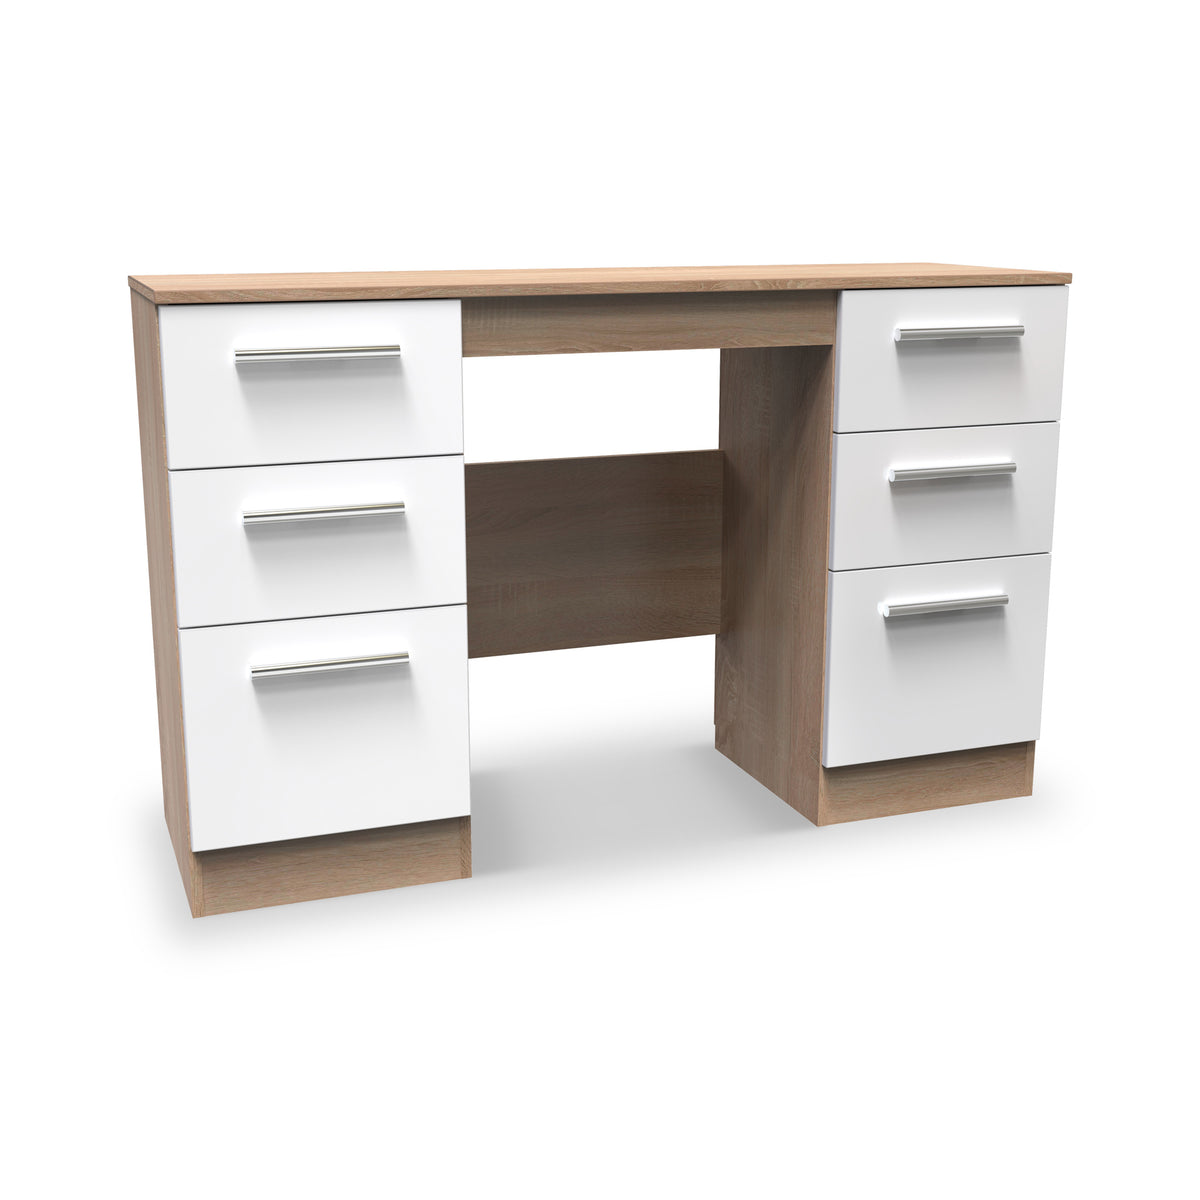 Blakely White and Light Oak 6 Drawer Storage Desk from Roseland Furniture